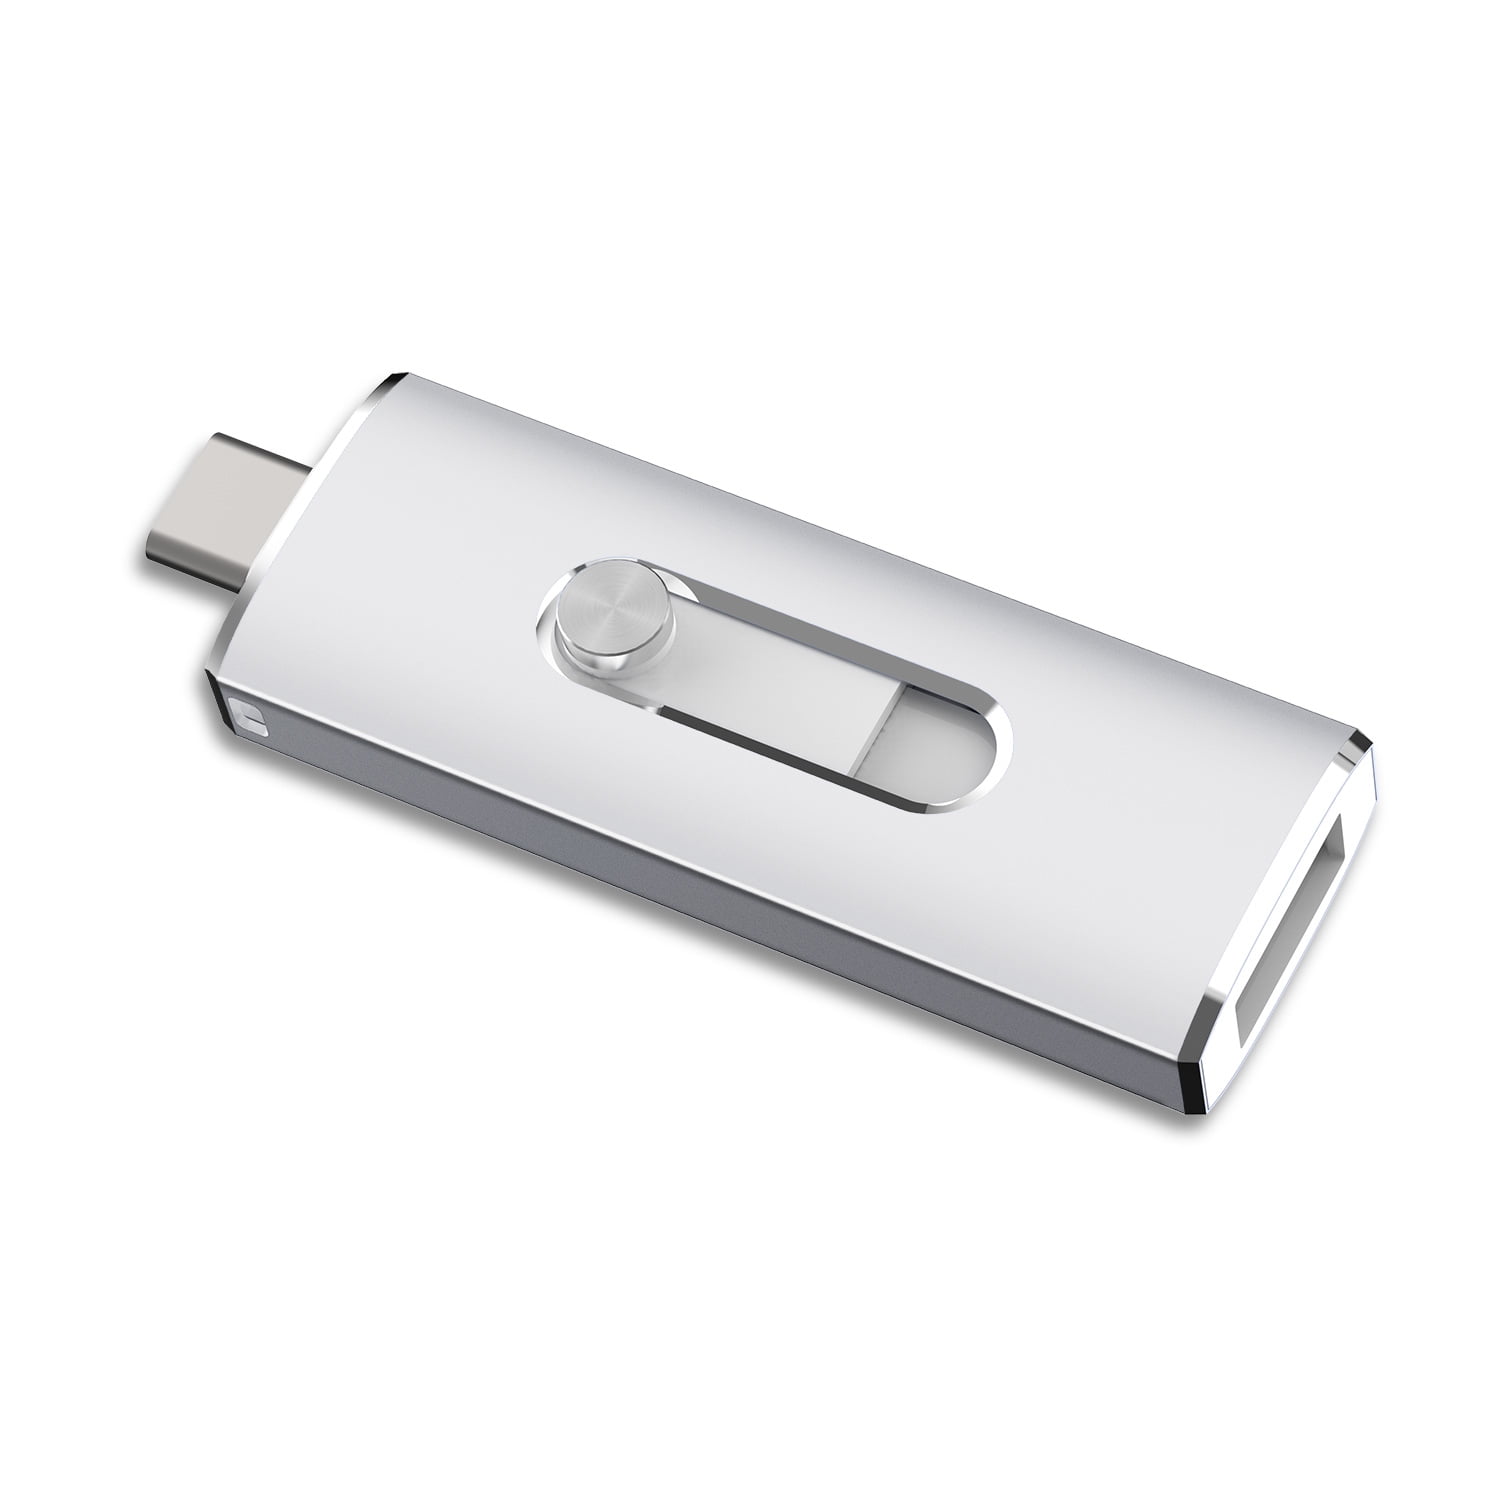 TOPESEL 32GB Memoria USB 3.0 Tipo C Dual OTG Flash Drive USB C Pendrives Llave Portátiles para Samsung Galaxy S8 Note 8 Google Pixel XL V30 Negro LG G6 S8 Plus